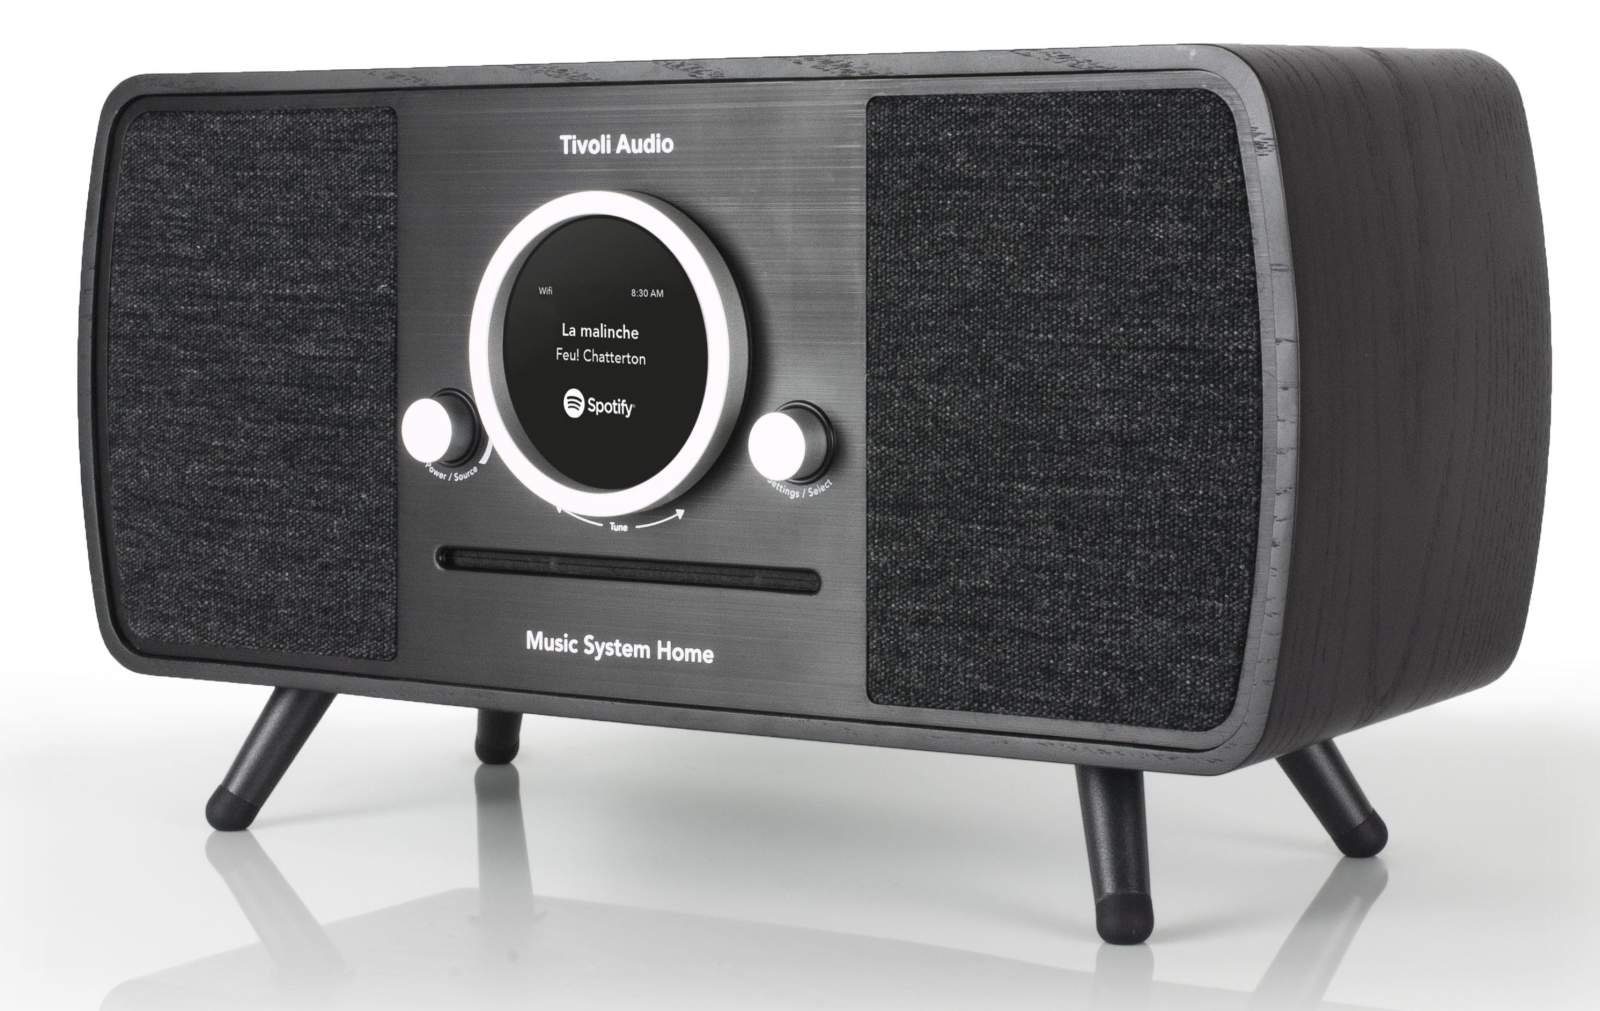 Tivoli Audio »Tivoli Audio Music System Home All-in-one FM/DAB+/«  Stereoanlage (Digitalradio (DAB),FM-Tuner, LAN/W-LAN,DAB+,CD,Bluetooth,inklusive  Fernbedienung,Display mit Uhrzeit, Weckfunktion,Amazon Alexa,  Streamingdienste) online kaufen | OTTO